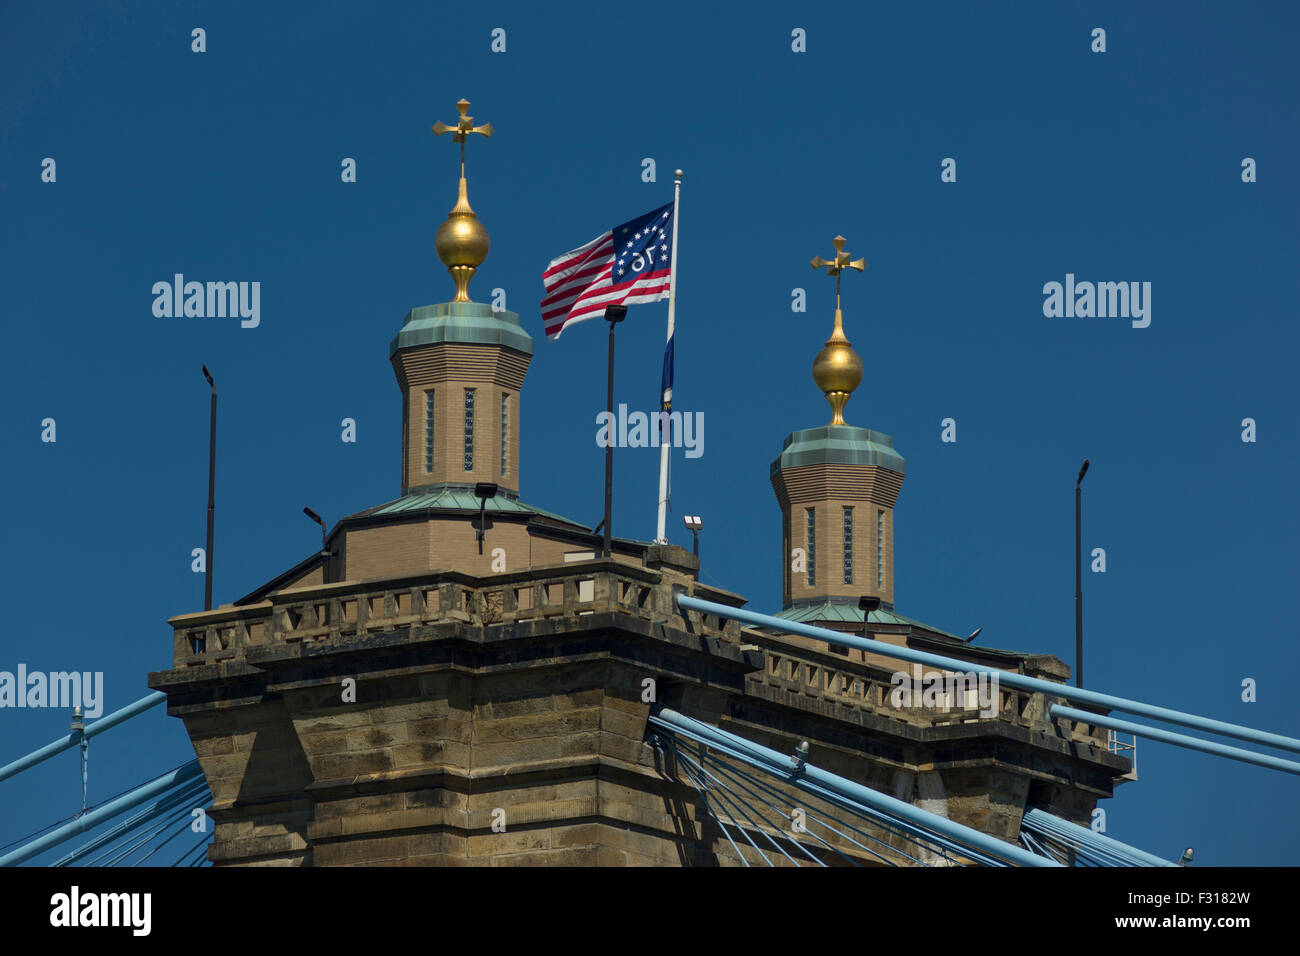 13 STERNE BENNINGTON 76 AMERIKANISCHE FLAGGE ROEBLING SUSPENSION BRIDGE (© JOHN REOBLING 1867) INNENSTADT VON CINCINNATI OHIO USA Stockfoto